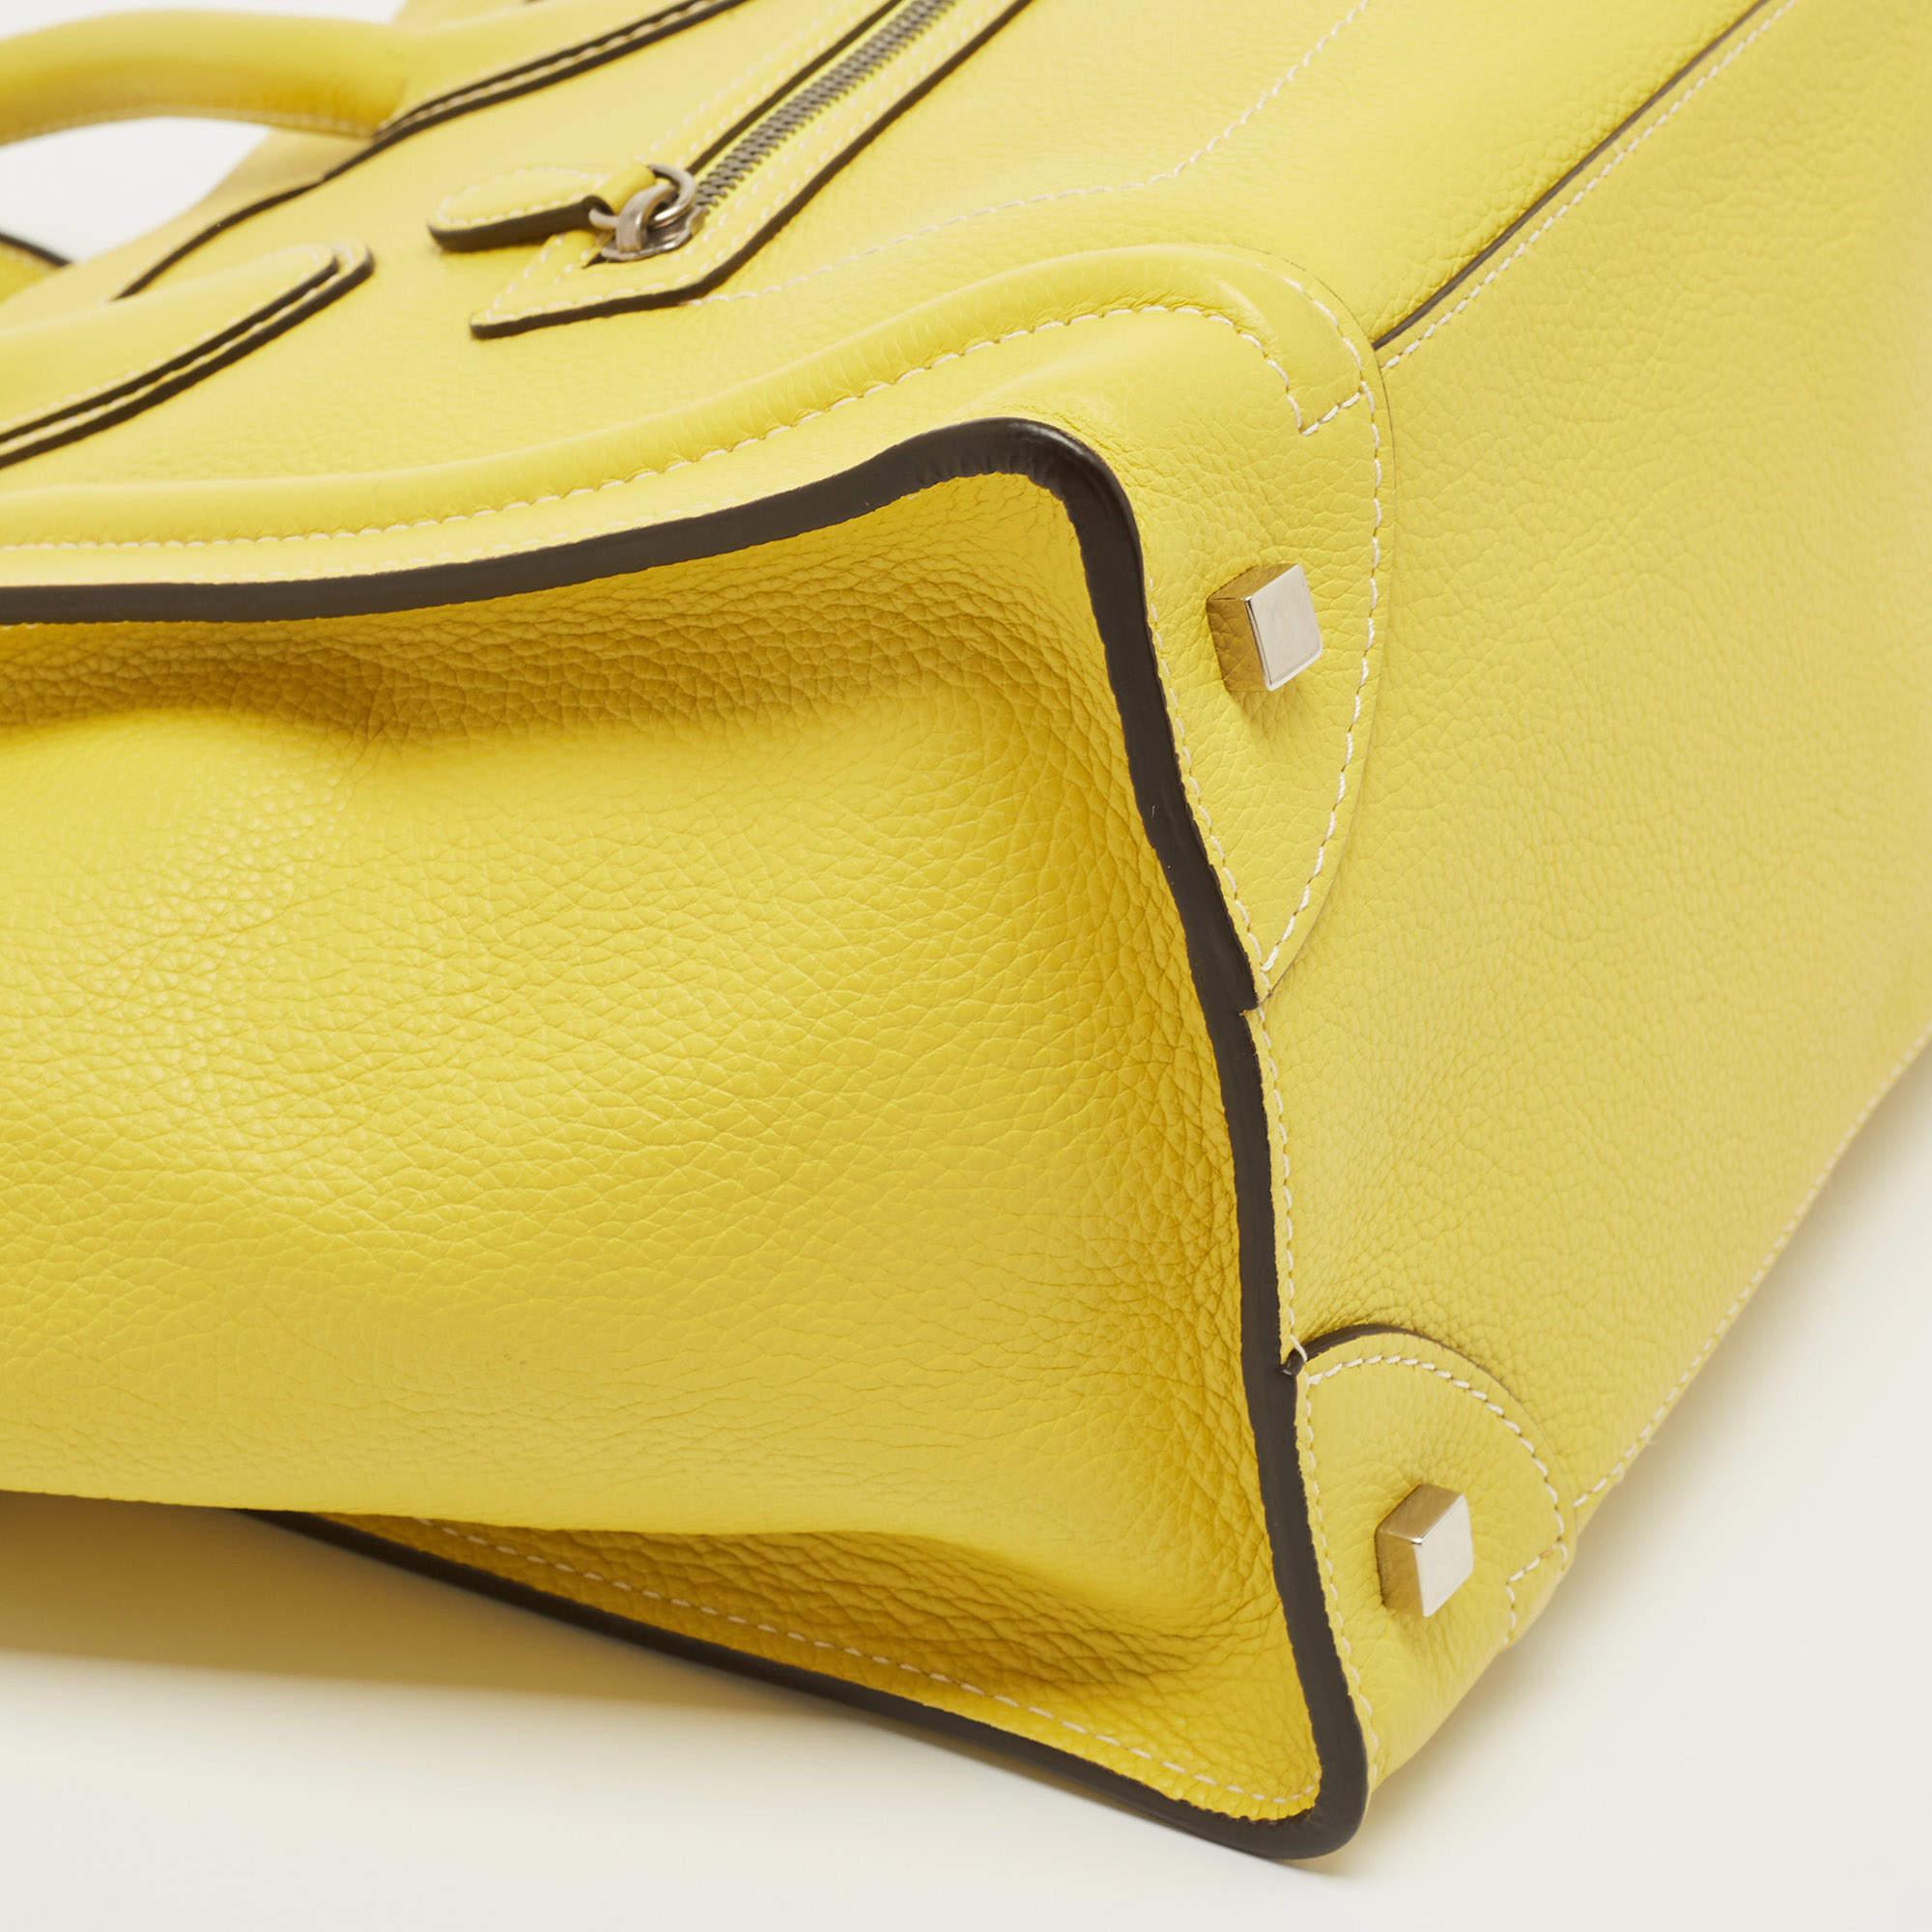 Celine Yellow Leather Mini Luggage Tote 1